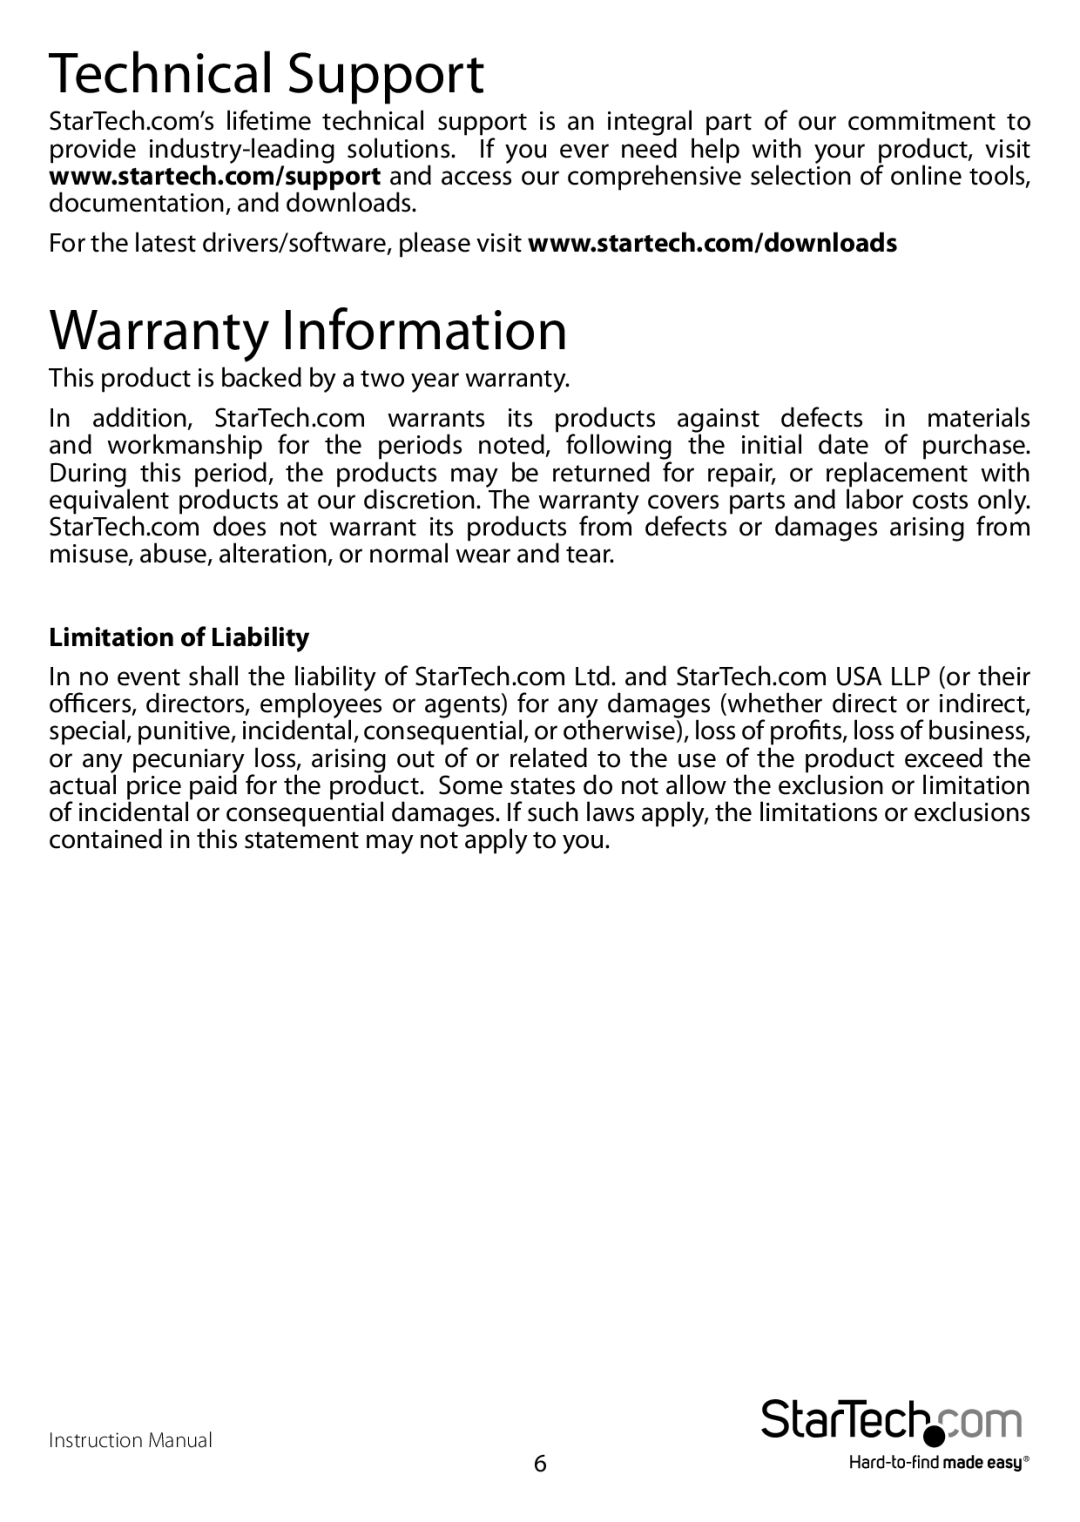 StarTech.com vs123HD manual Technical Support, Warranty Information, Limitation of Liability 